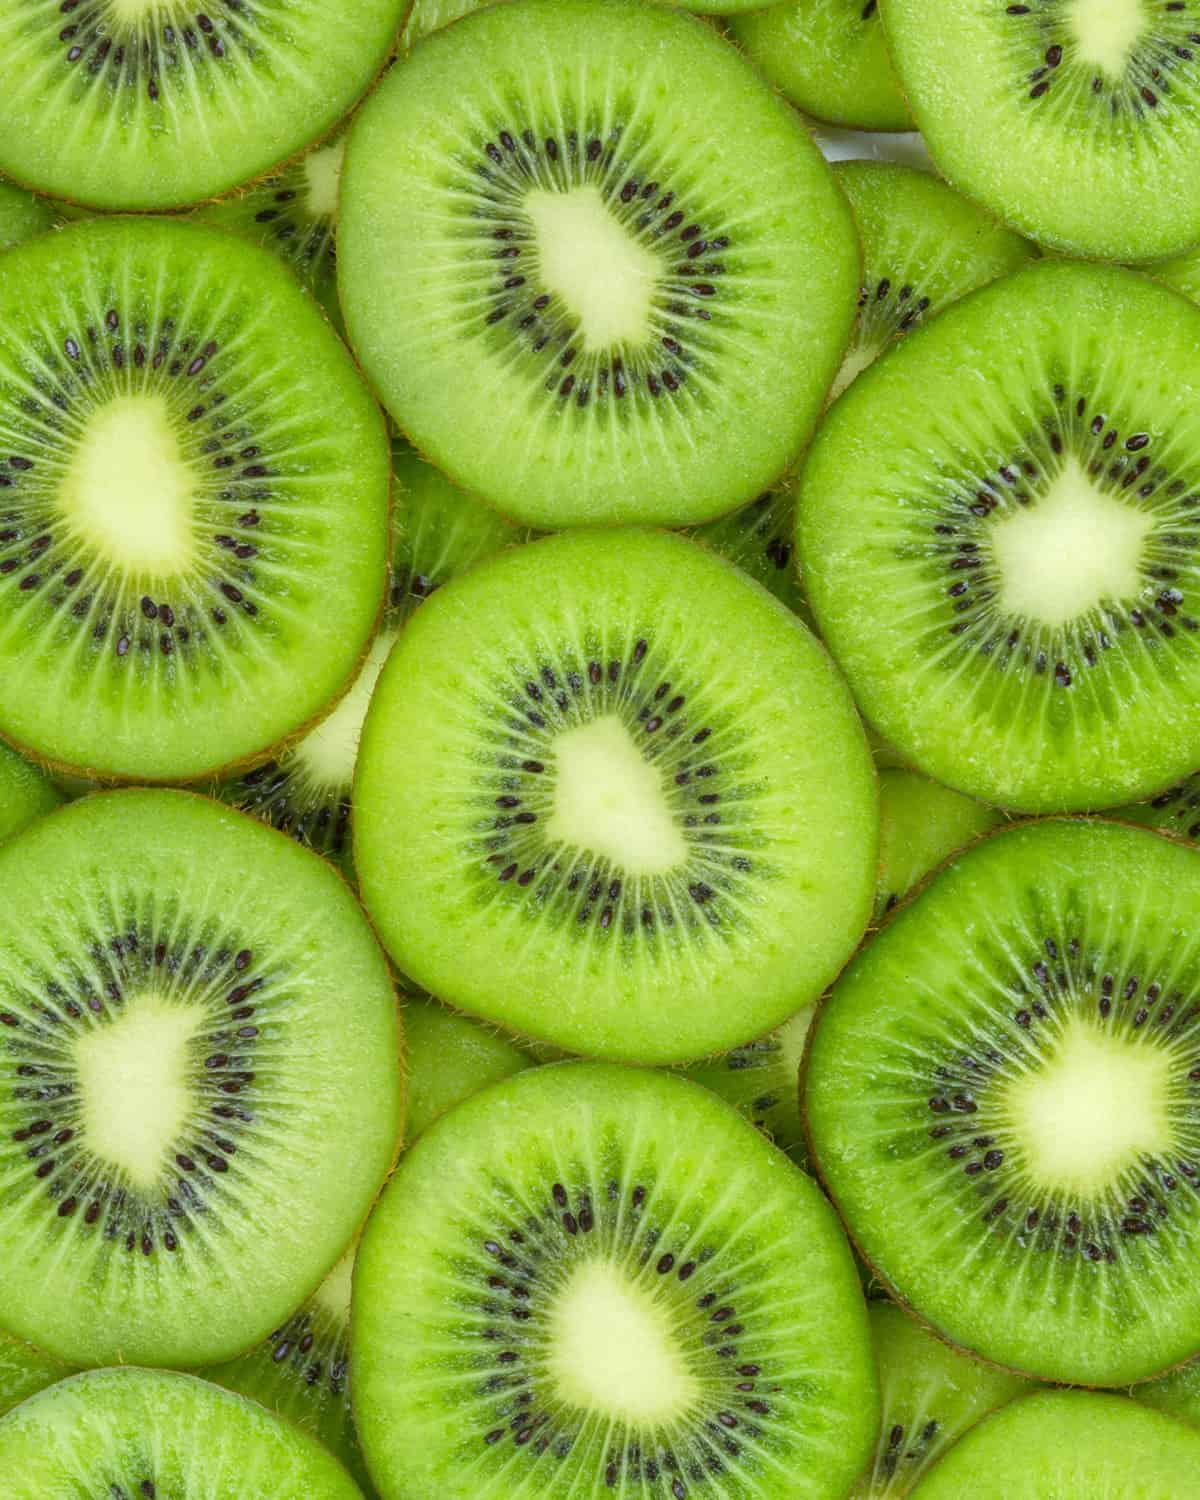 seasonal kiwi fruits, sliced in half and arranged decoratively.